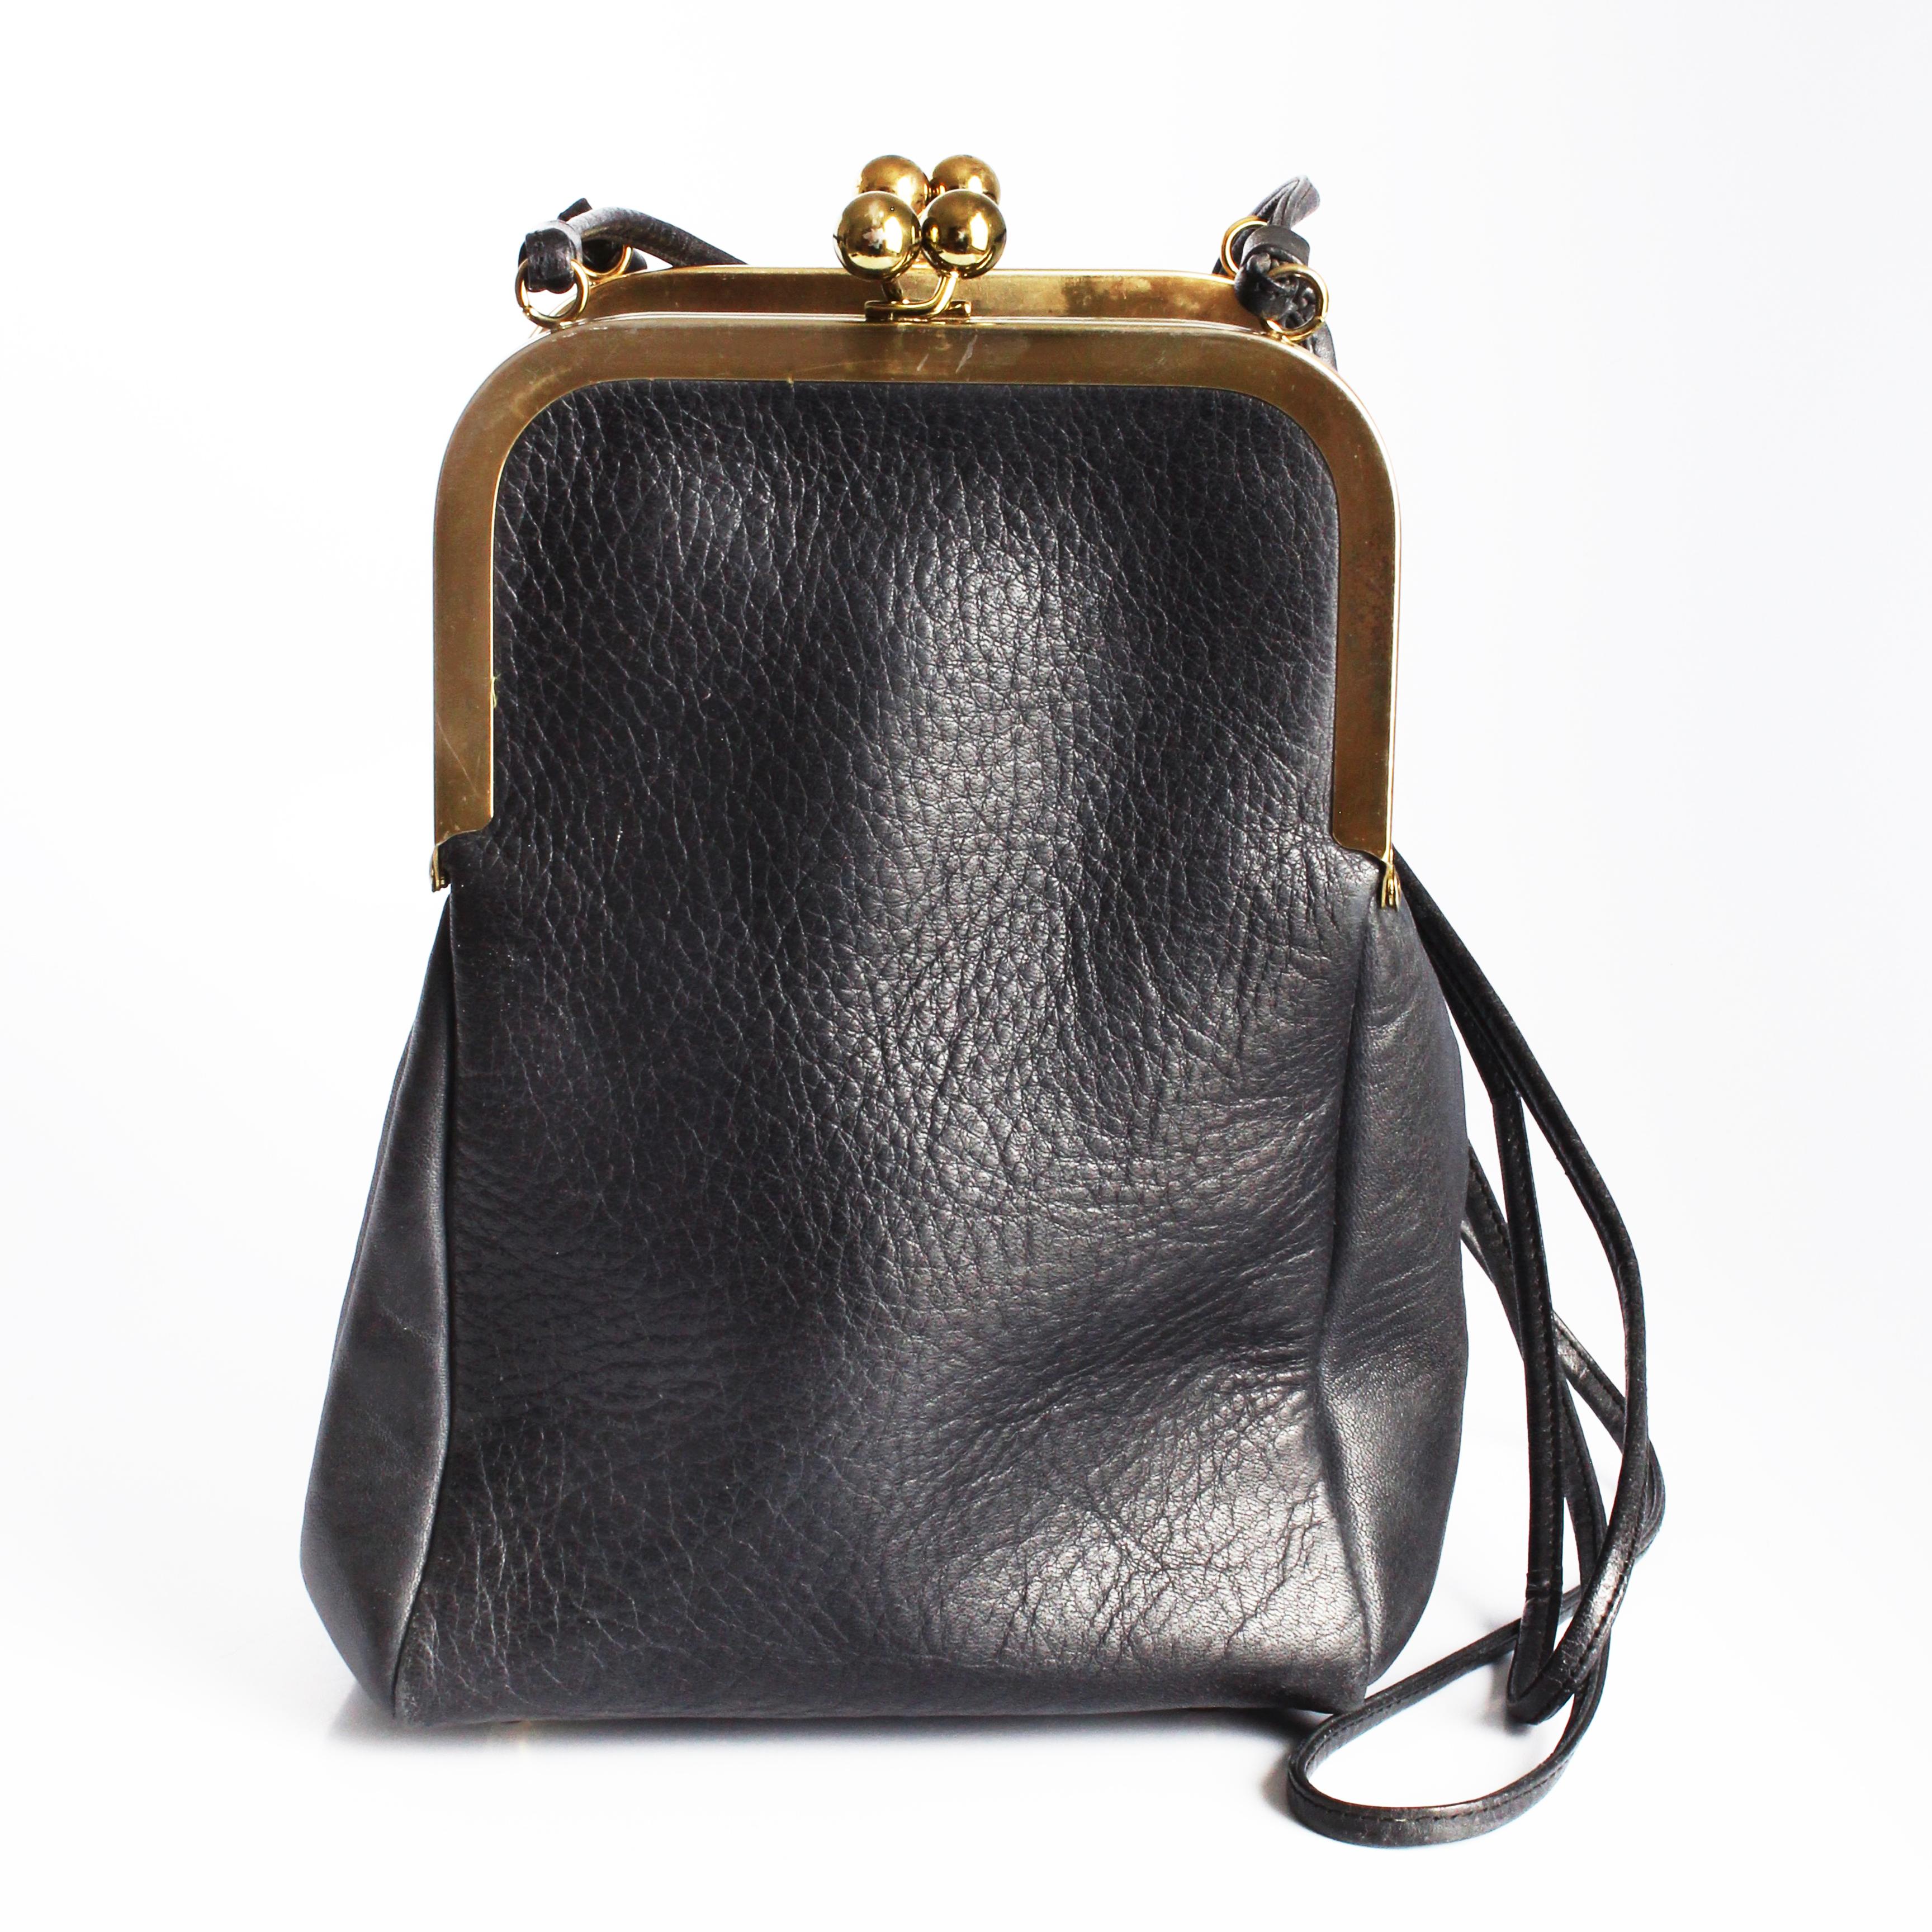 Bonnie Cashin Coach Bag Swinger Black Double Header Shoulder Bag + New Hangtag For Sale 4